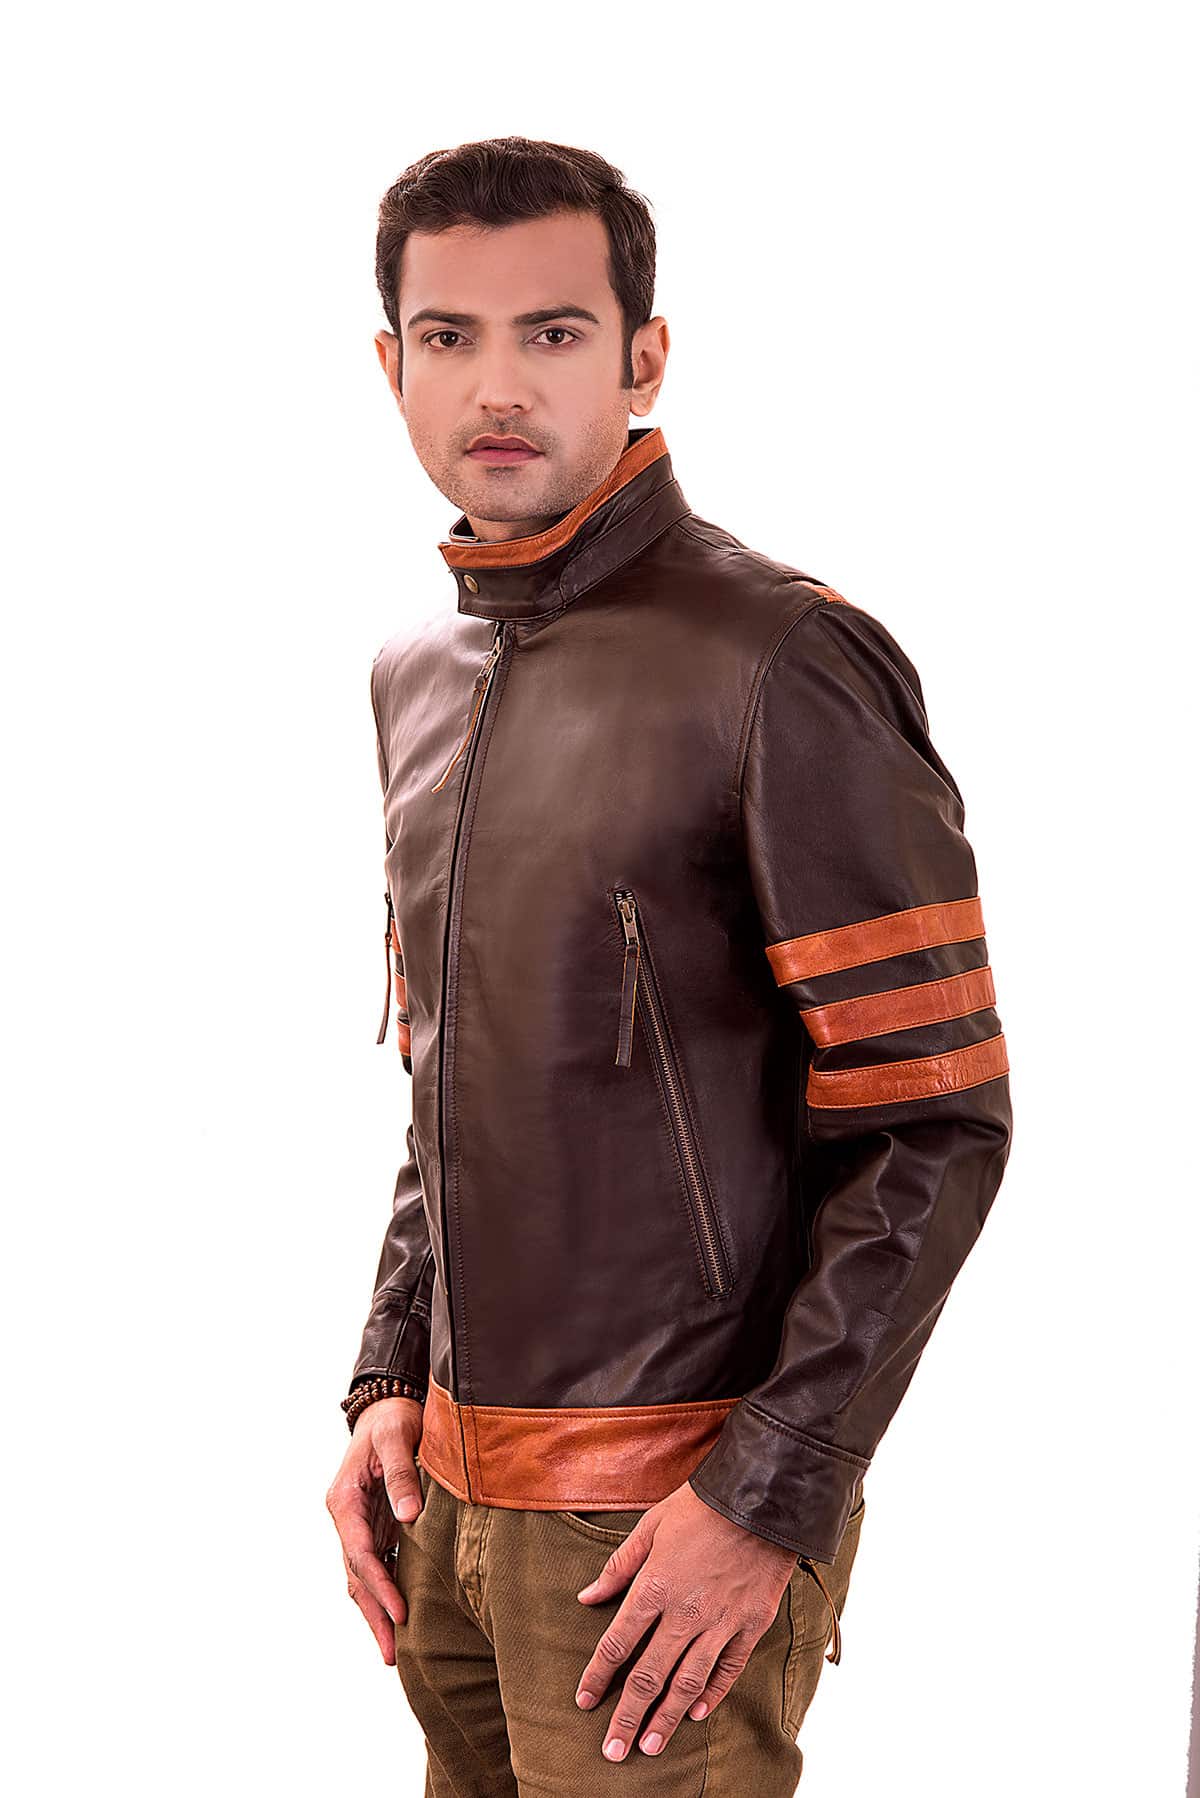 Trendz&ideas X-Men Origins Wolverine Brown w Tan Stripes Distressed Leather Jacket